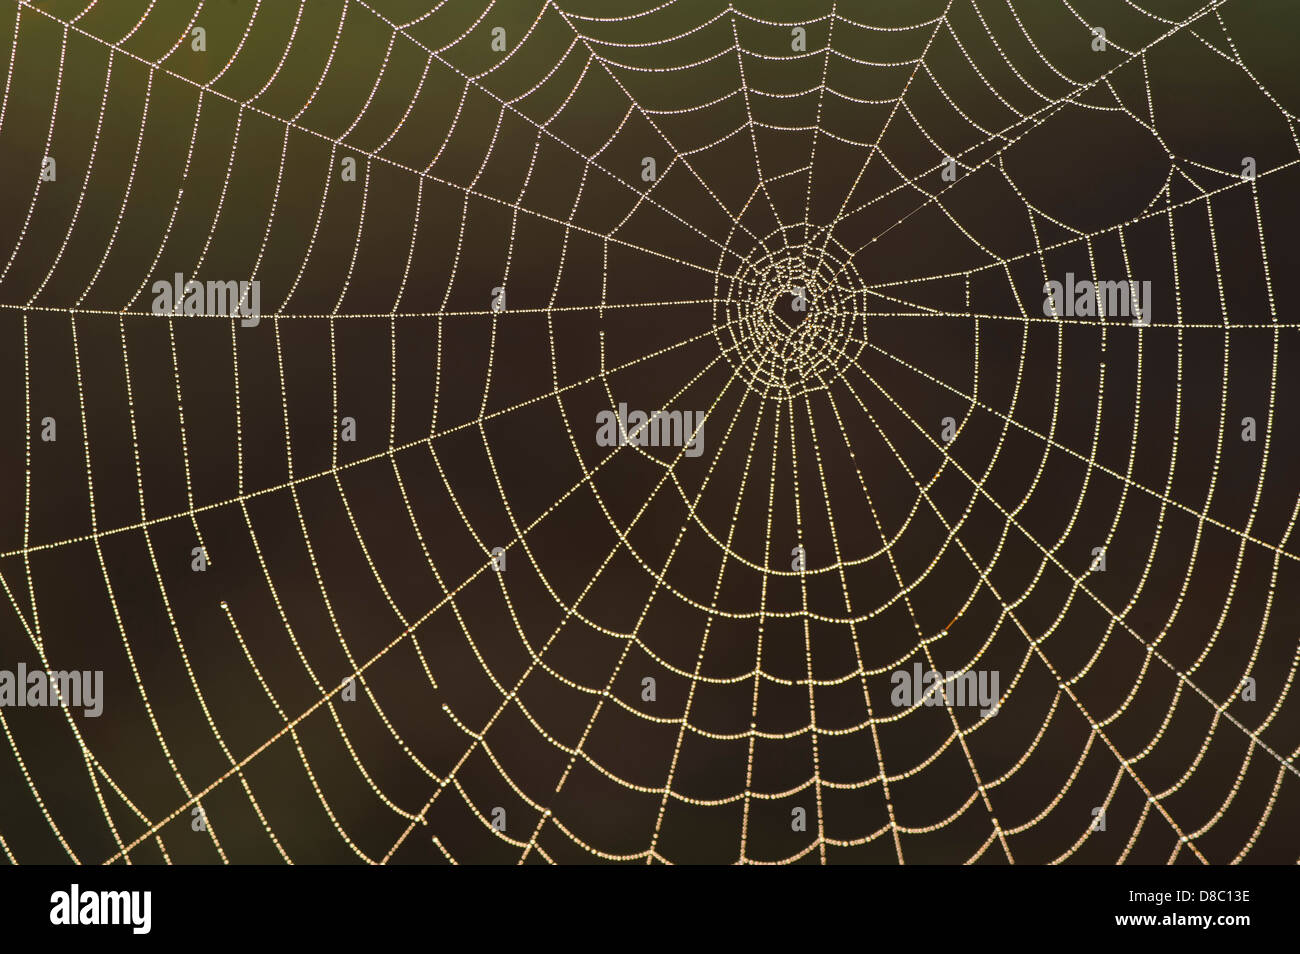 spider's web, germany Stock Photo